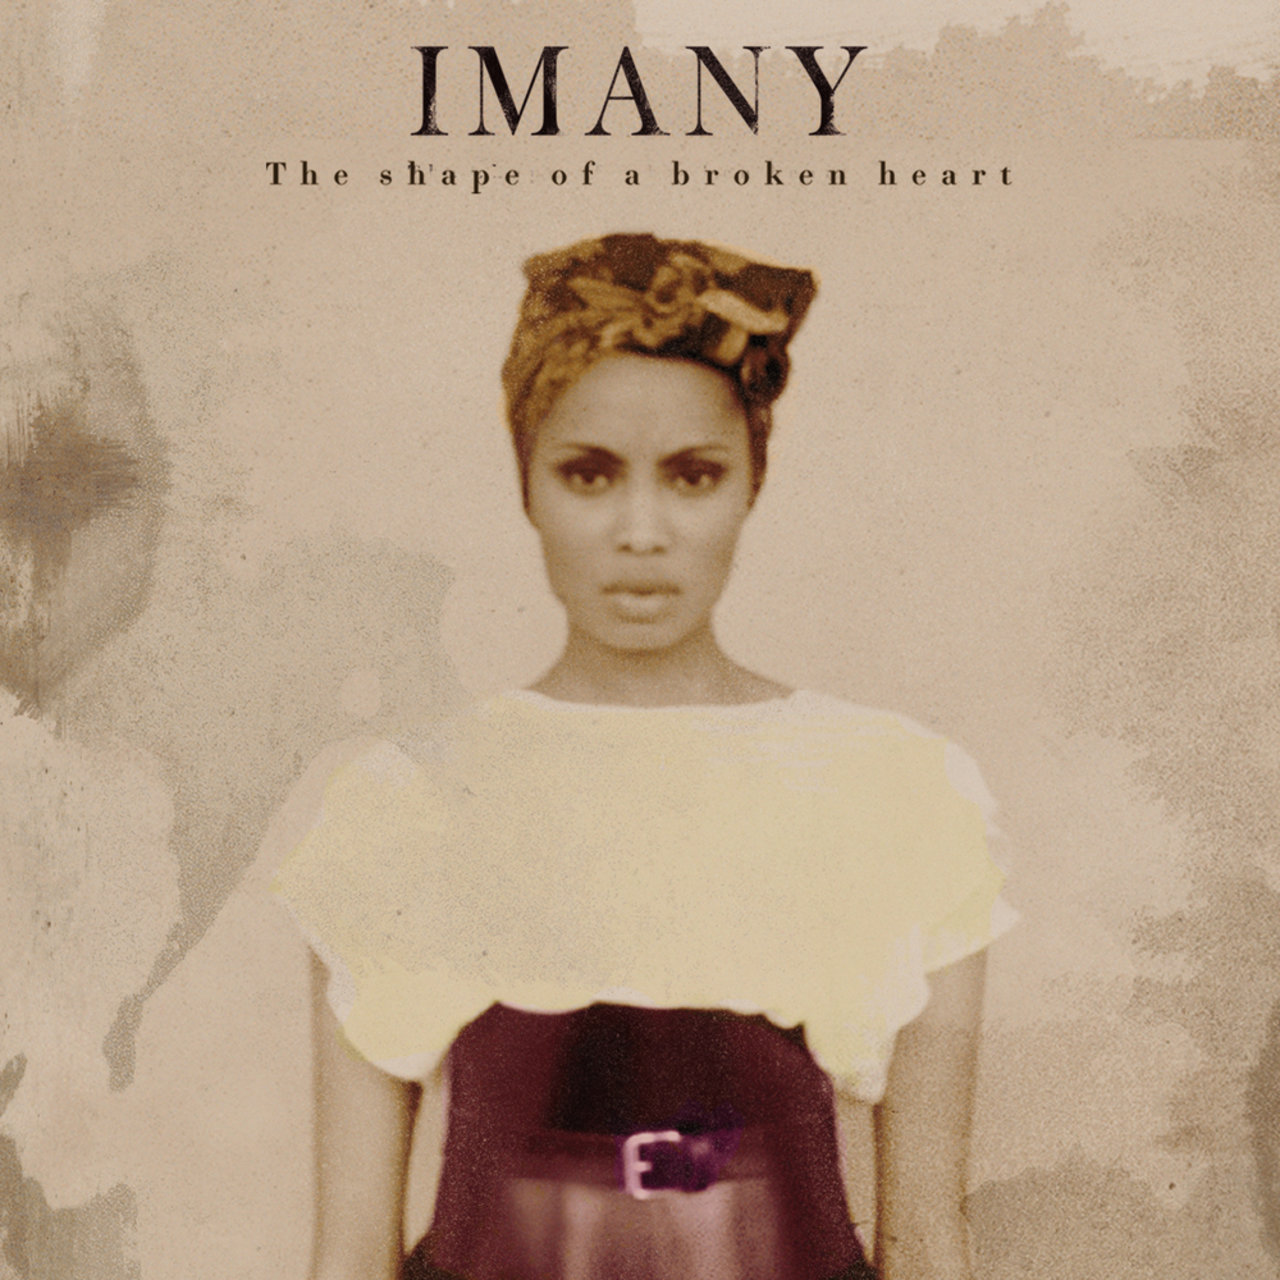 Imany The Shape of a Broken Heart cover artwork